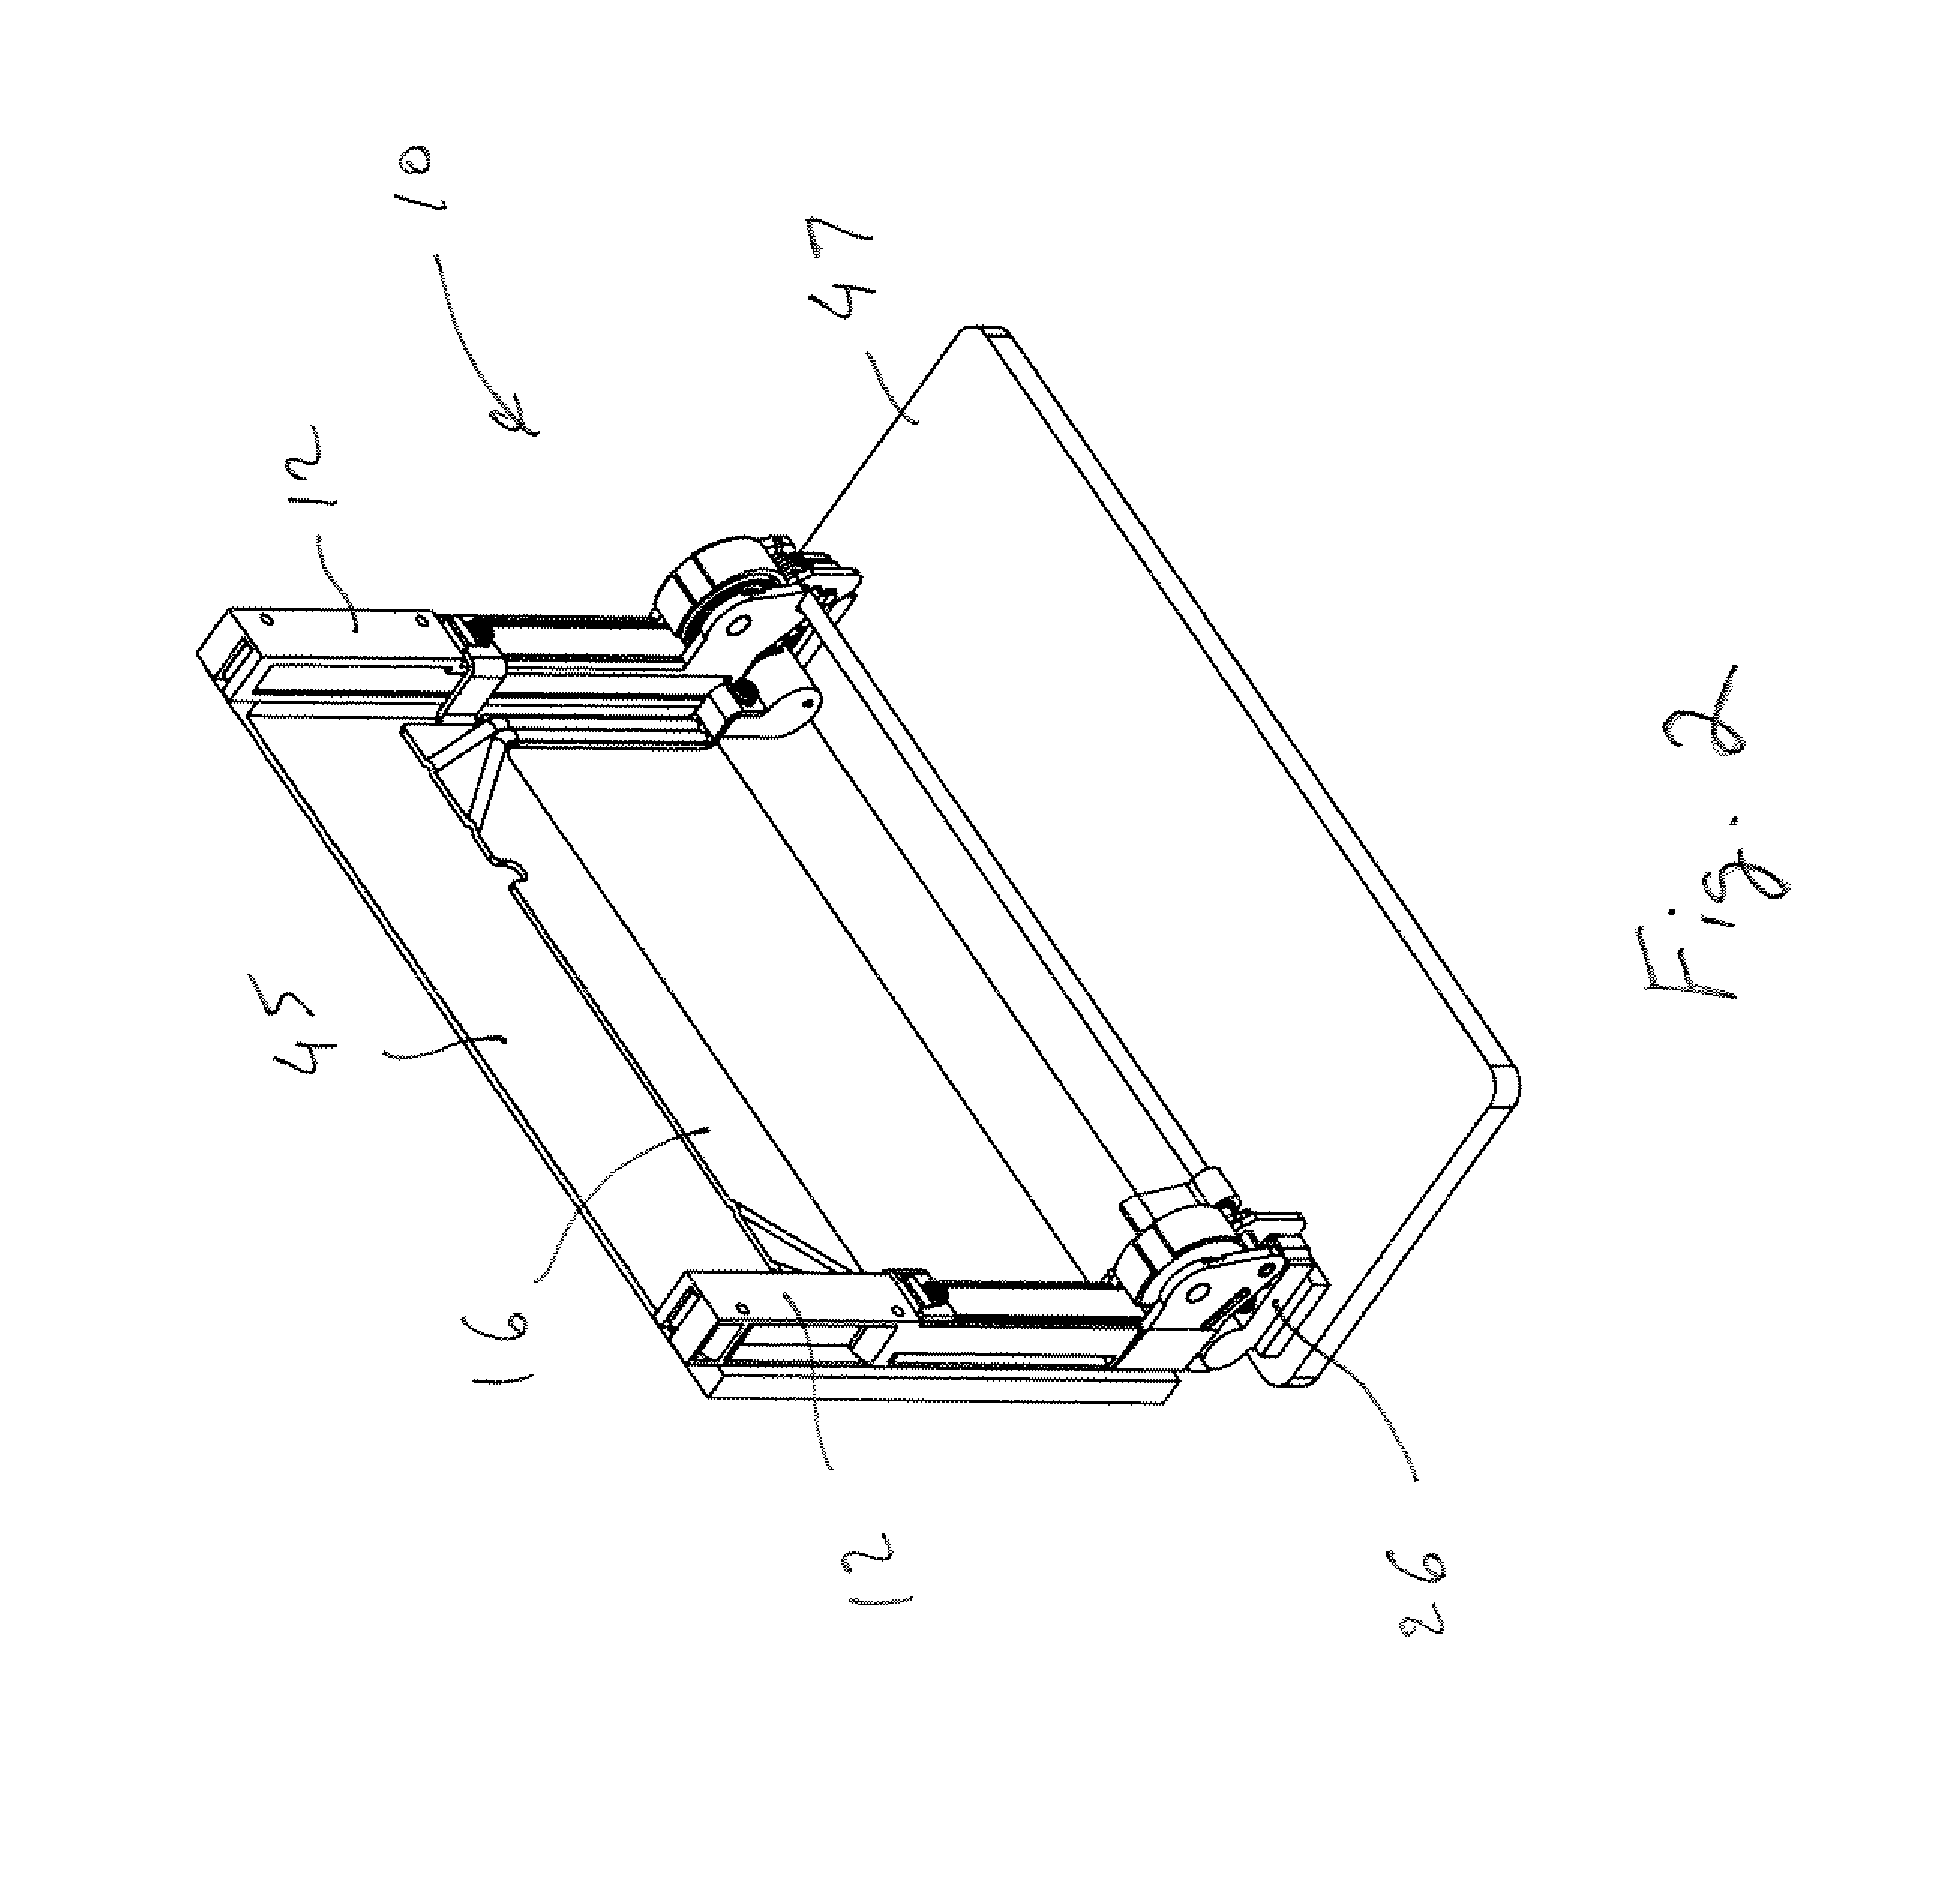 Sliding and rotating hinge module